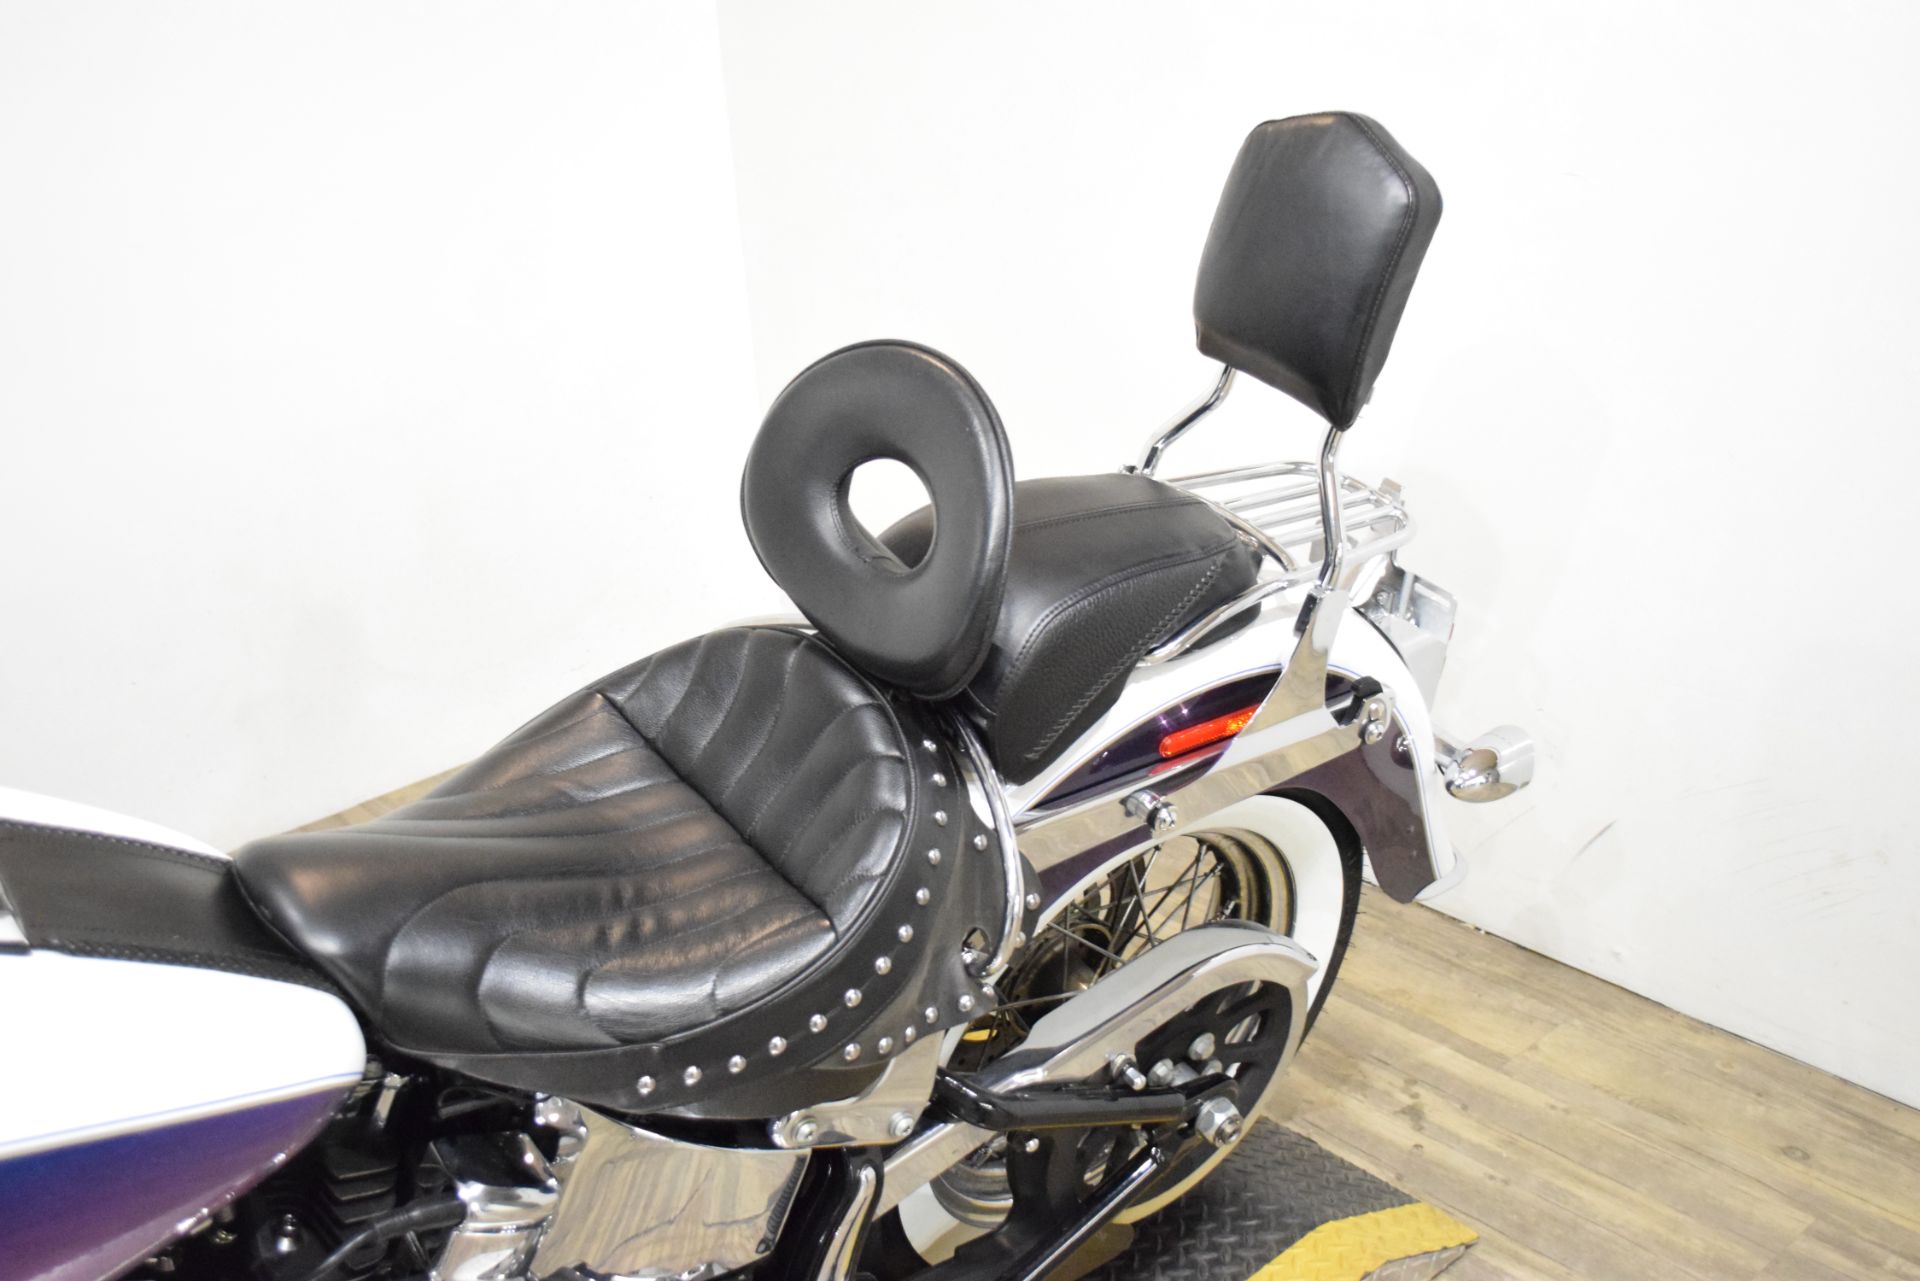 2010 Harley-Davidson Softail® Deluxe in Wauconda, Illinois - Photo 17